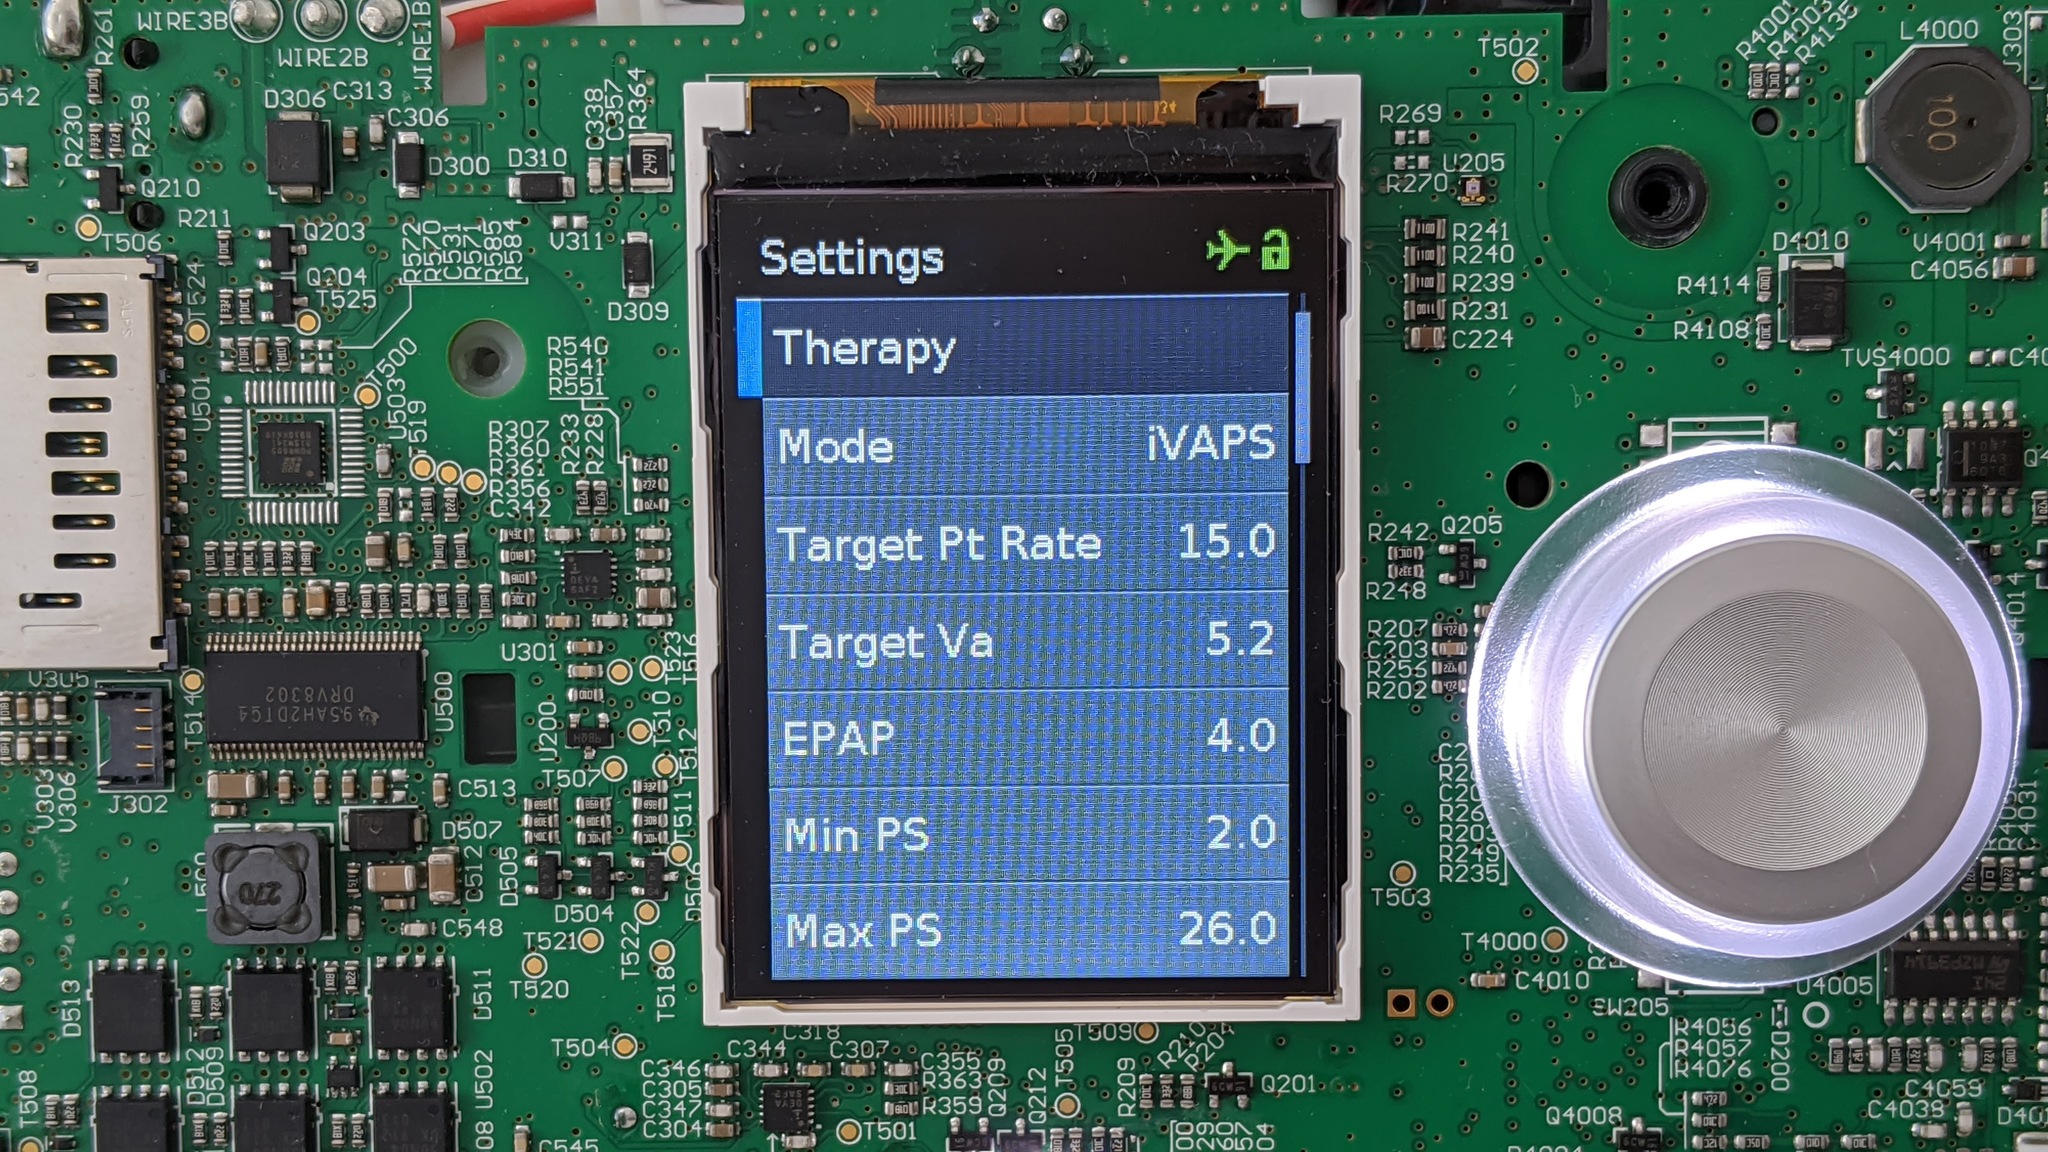 Airsense 10 CPAP machine with iVAPS configuration menu